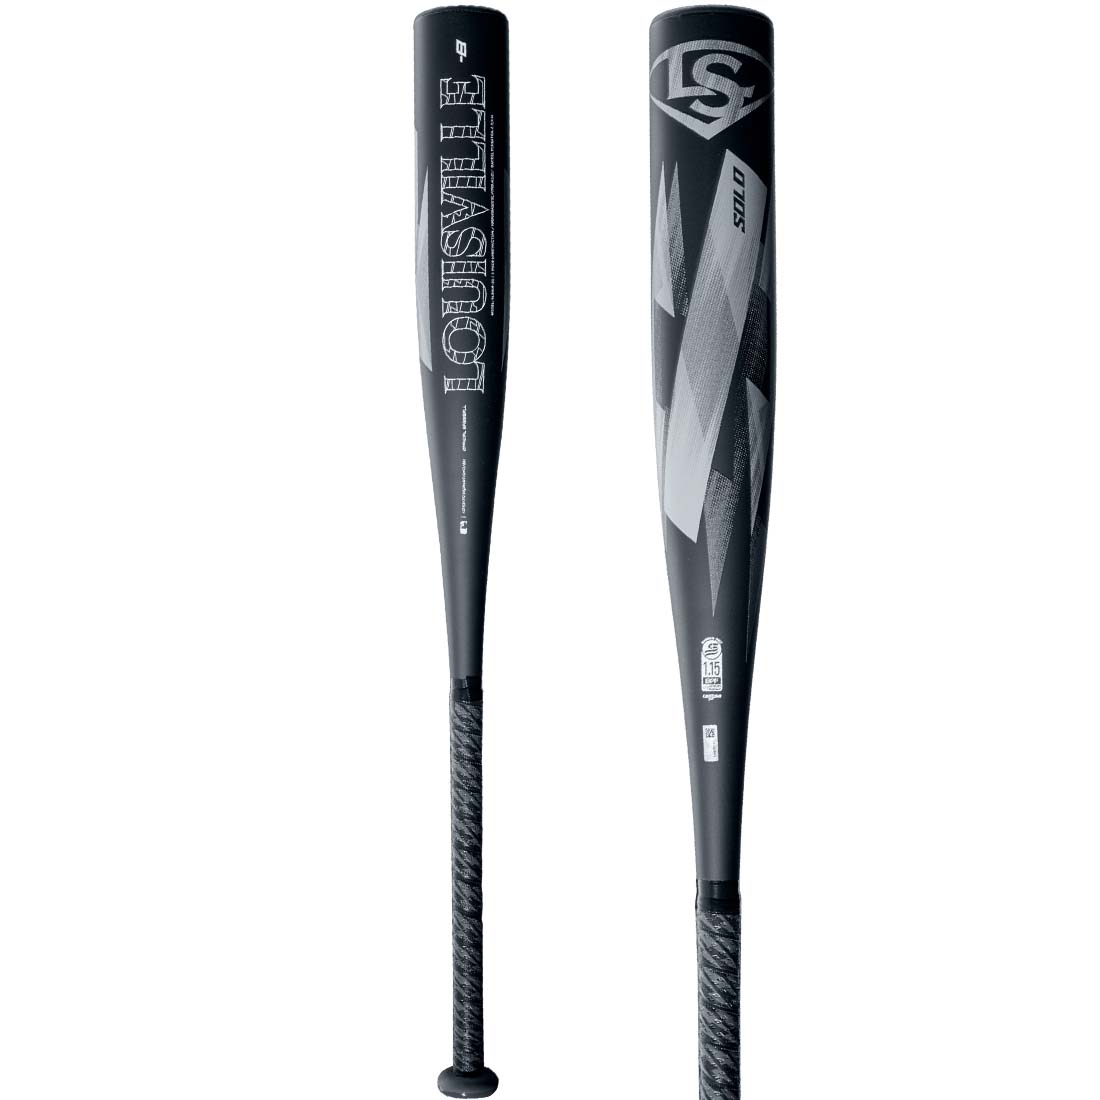 Louisville Slugger 2022 Solo (-8) USSSA Baseball Bat